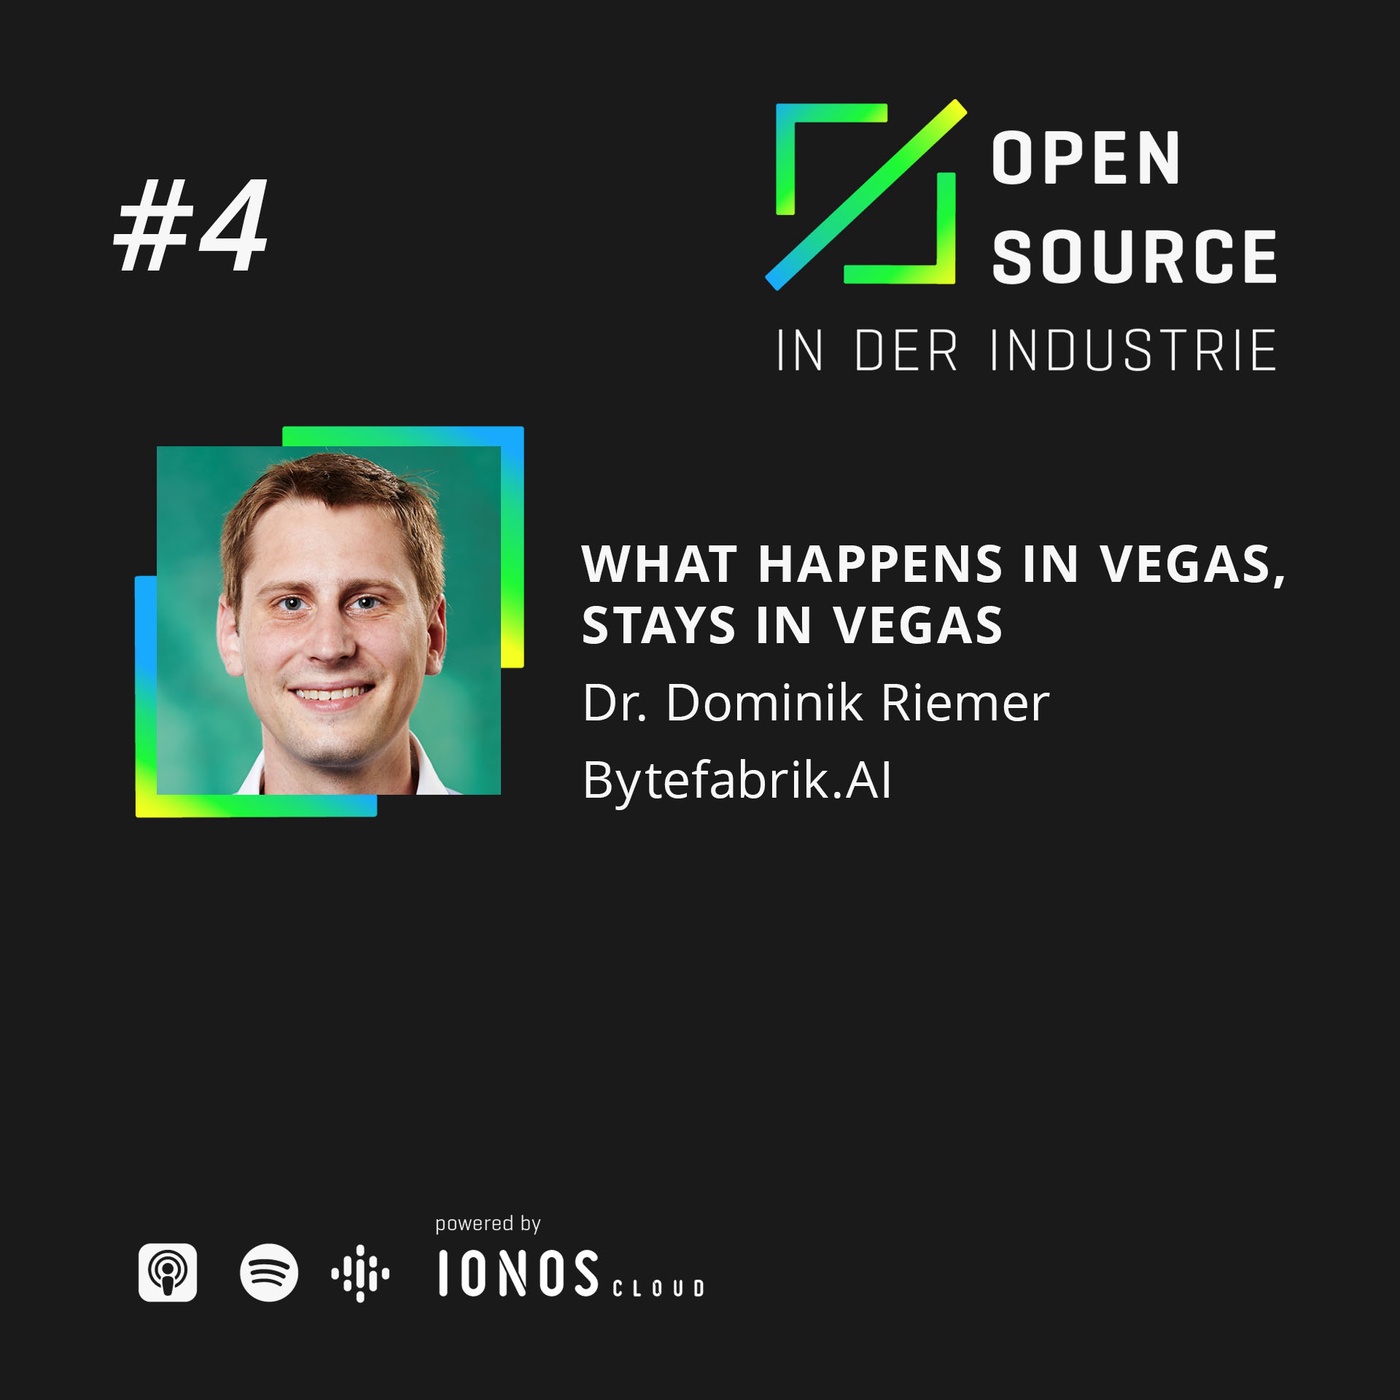 Open Source: What happens in Vegas, stays in Vegas